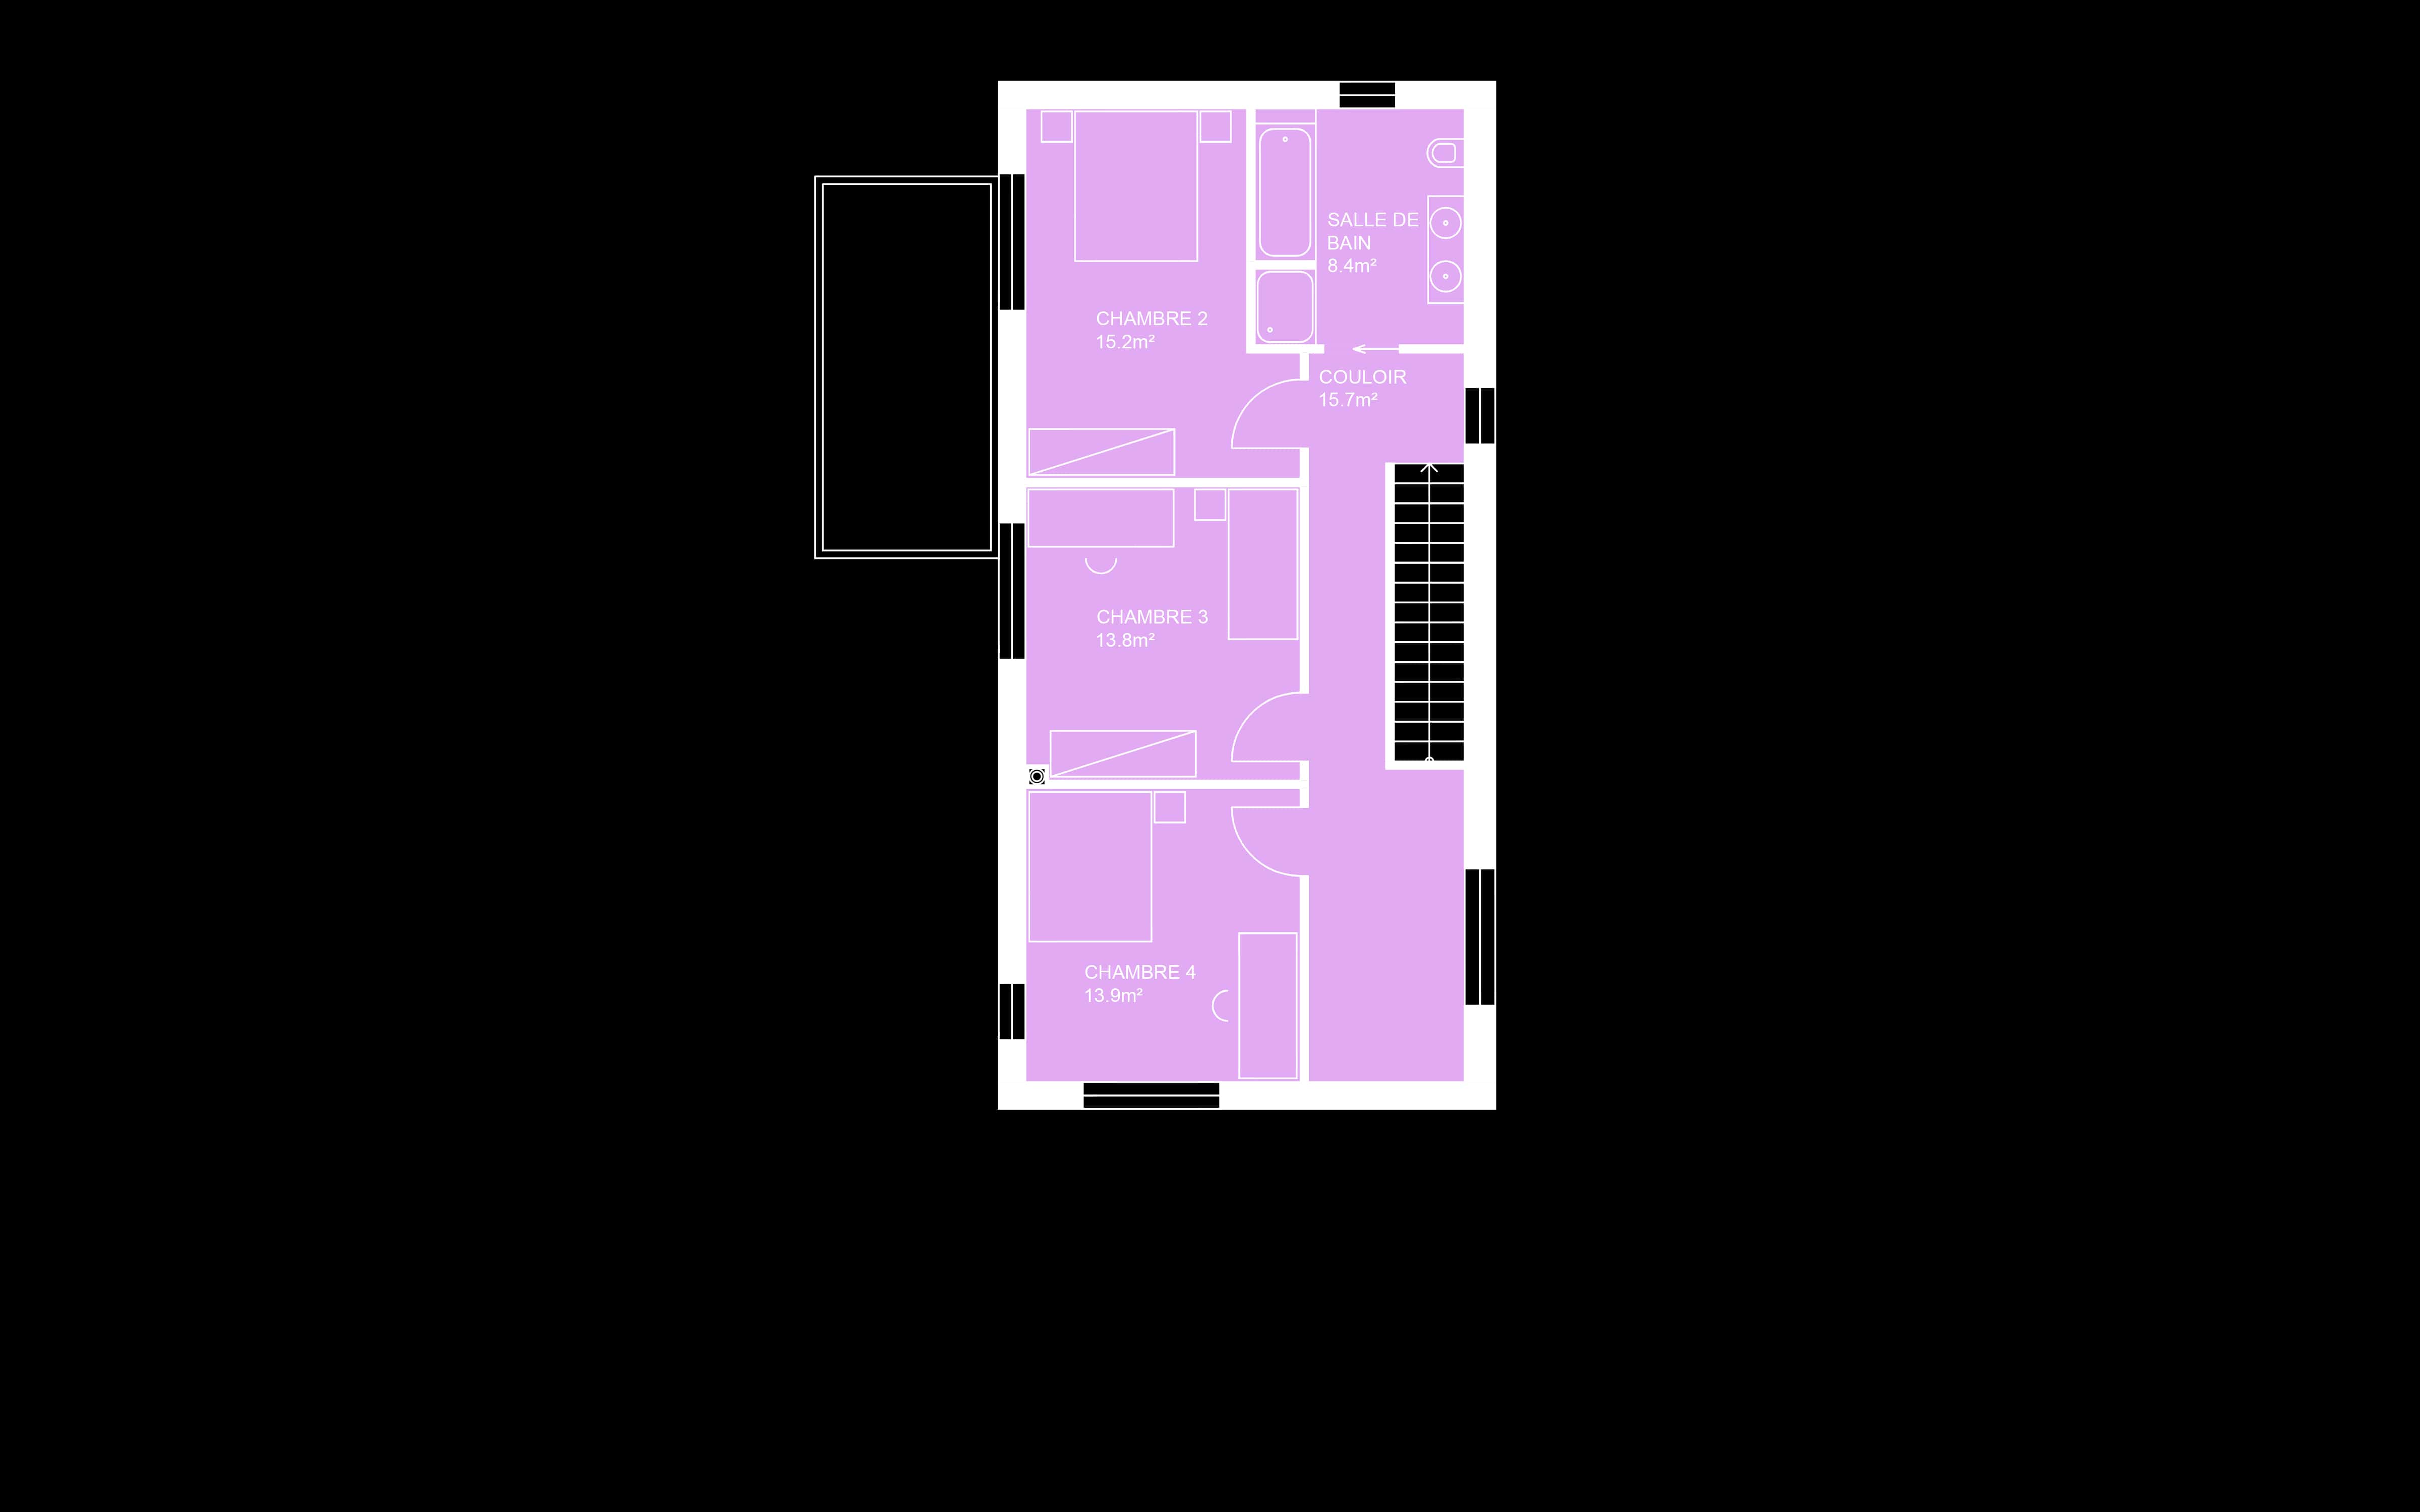 Image 03 - plan - étage